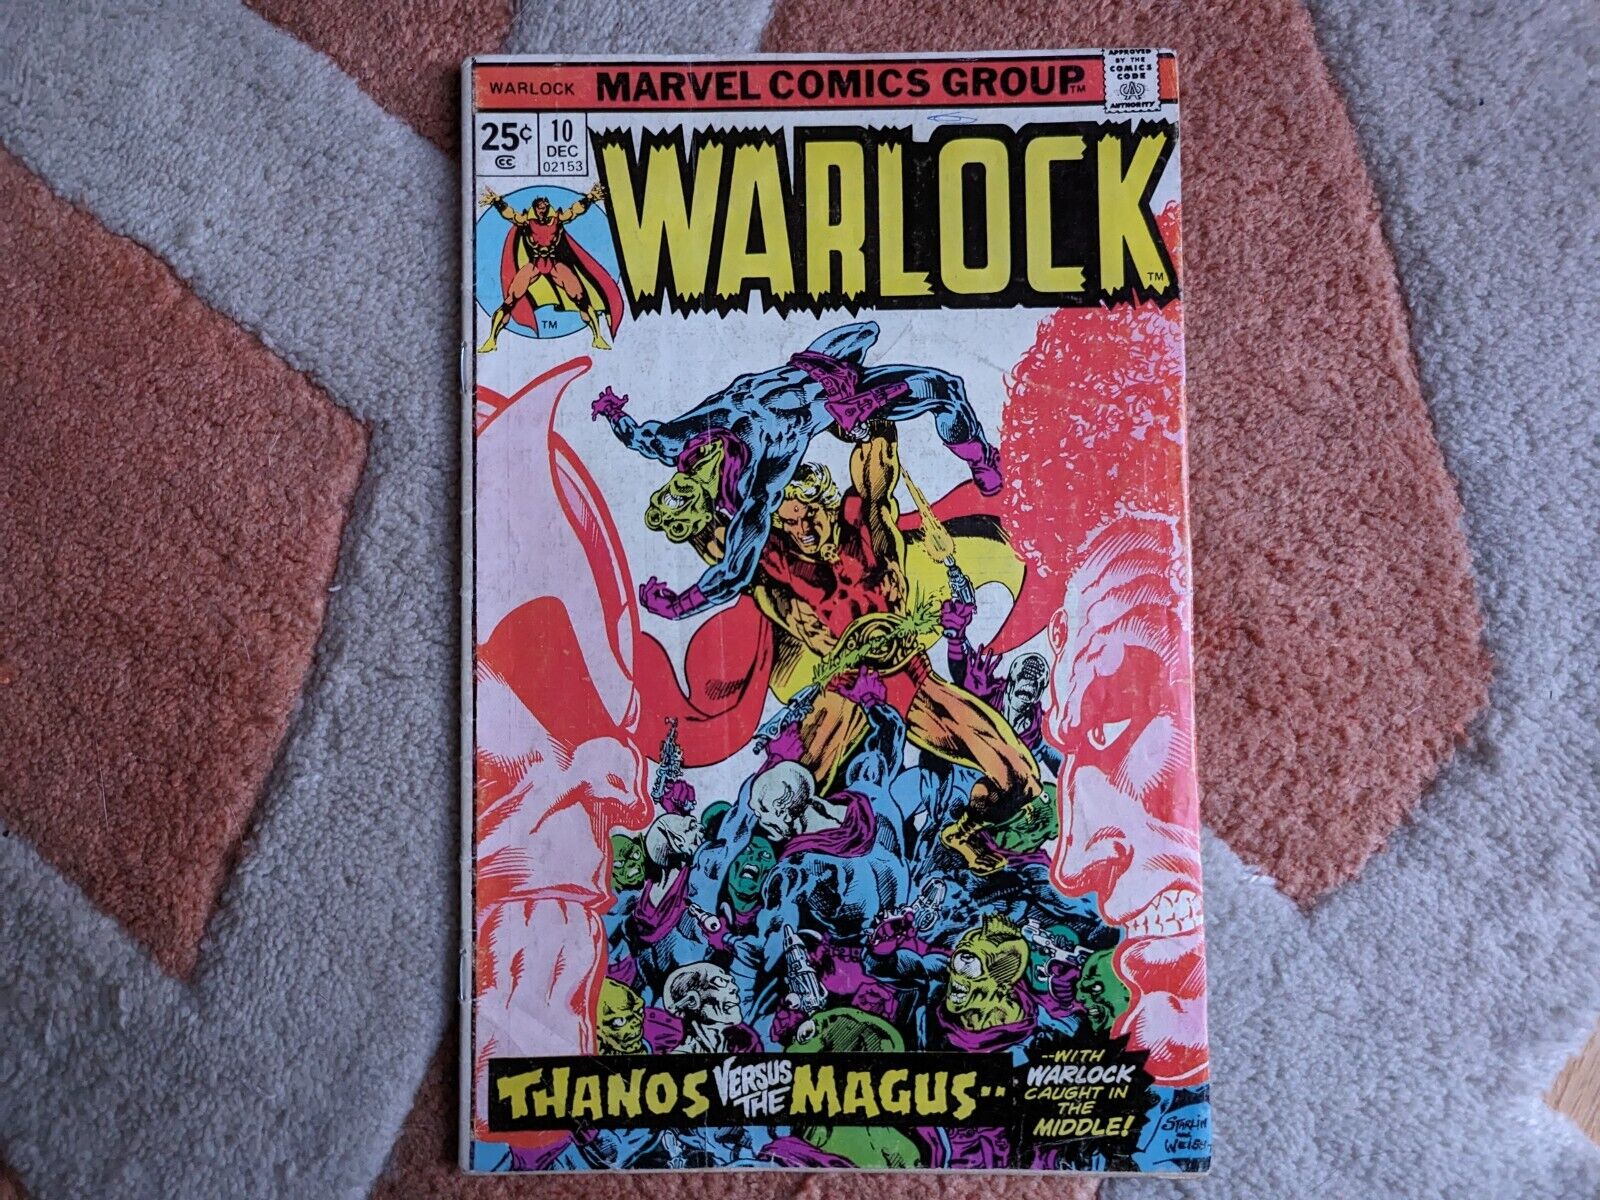 Warlock #10 - Vol. 1 - 1975 - Thanos - Magus - Marvel Comics - VG